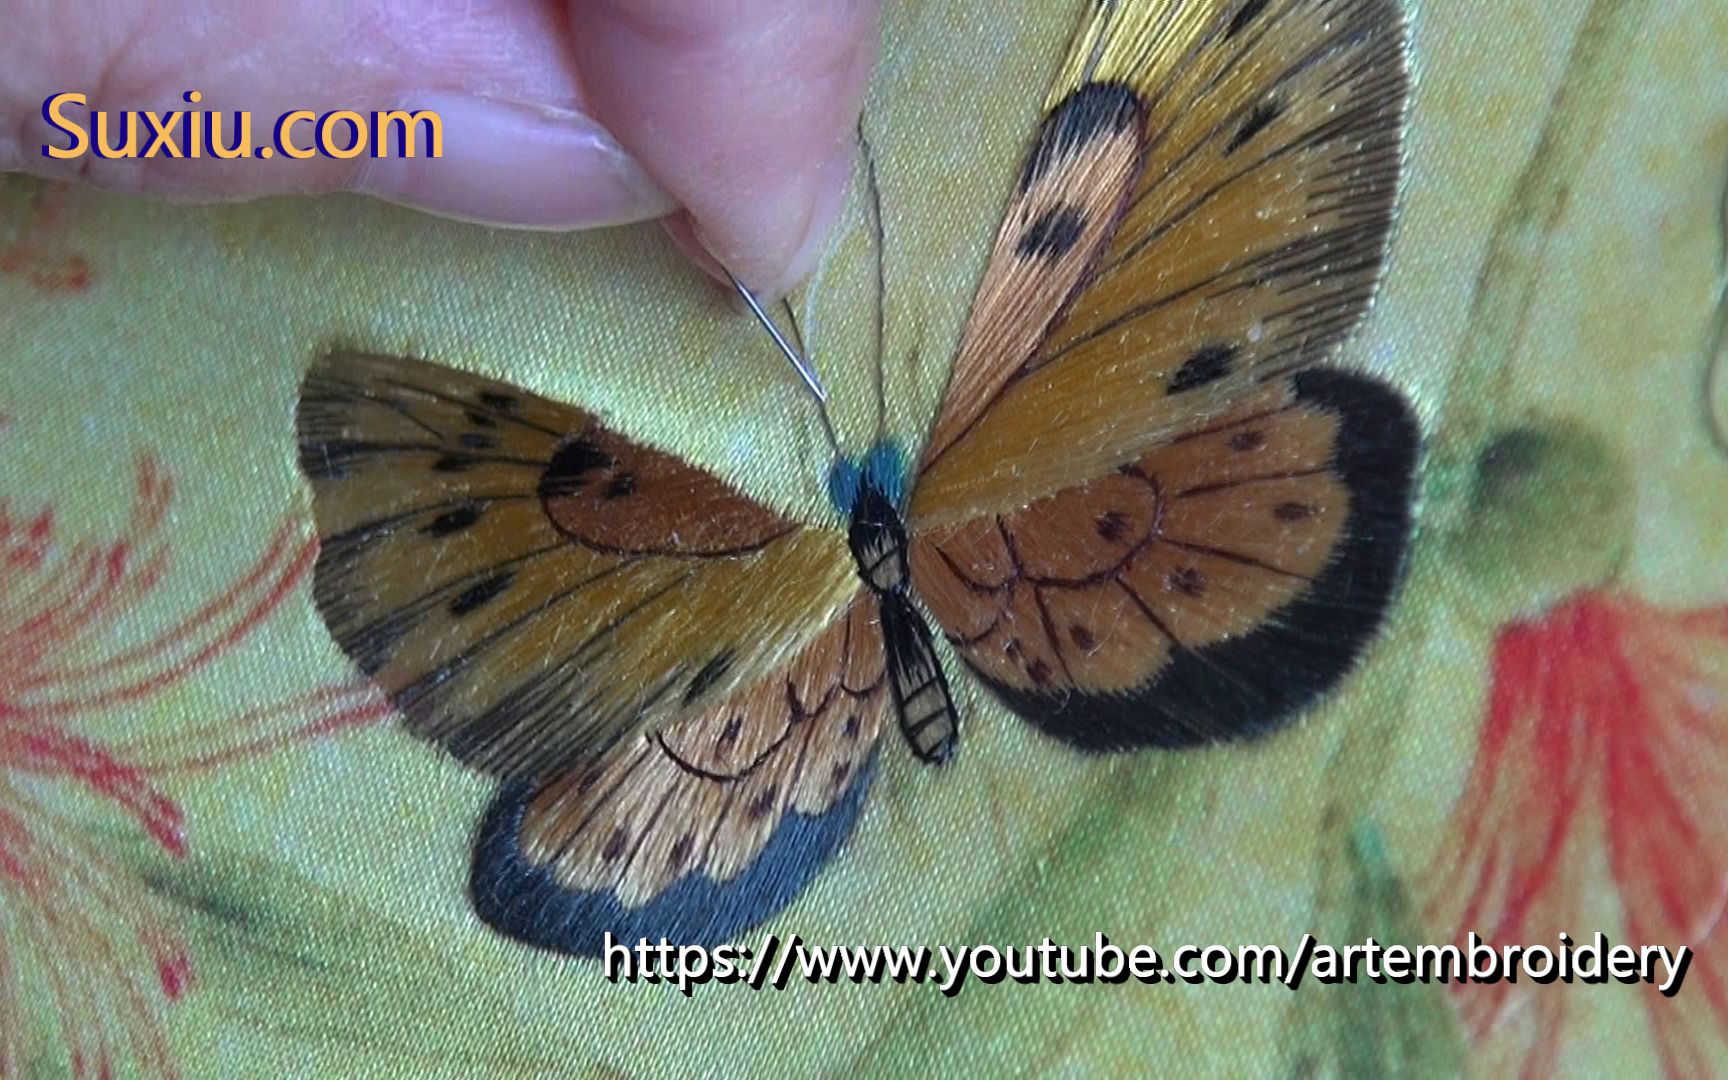 Artembroidery苏绣(苏州刺绣)视频-蝴蝶的双面绣全部绣制过程